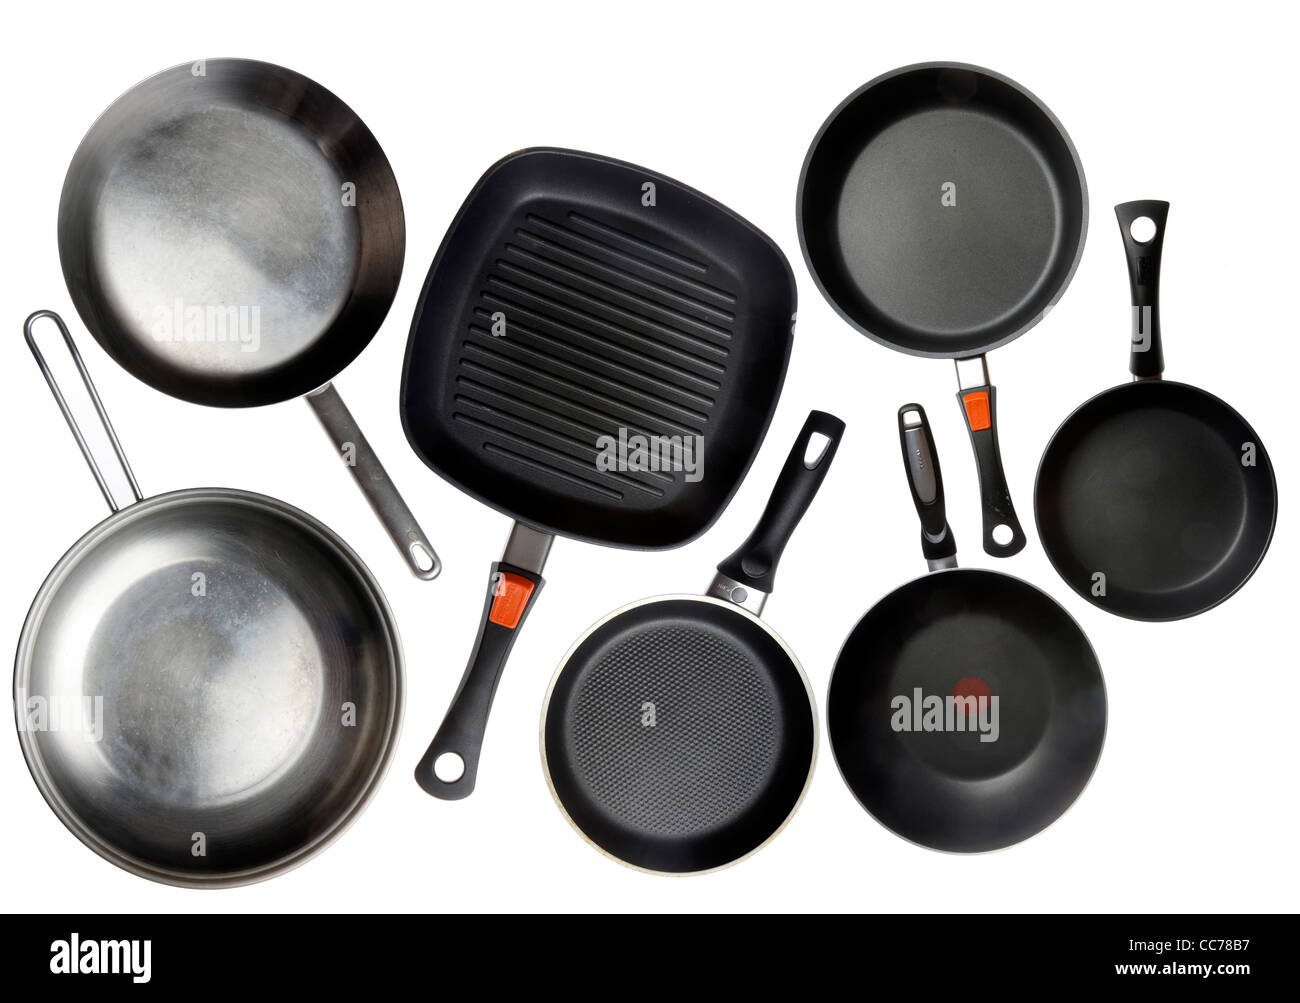 Compilation of various kitchen utensils, kitchen tools, pans. Stock Photo